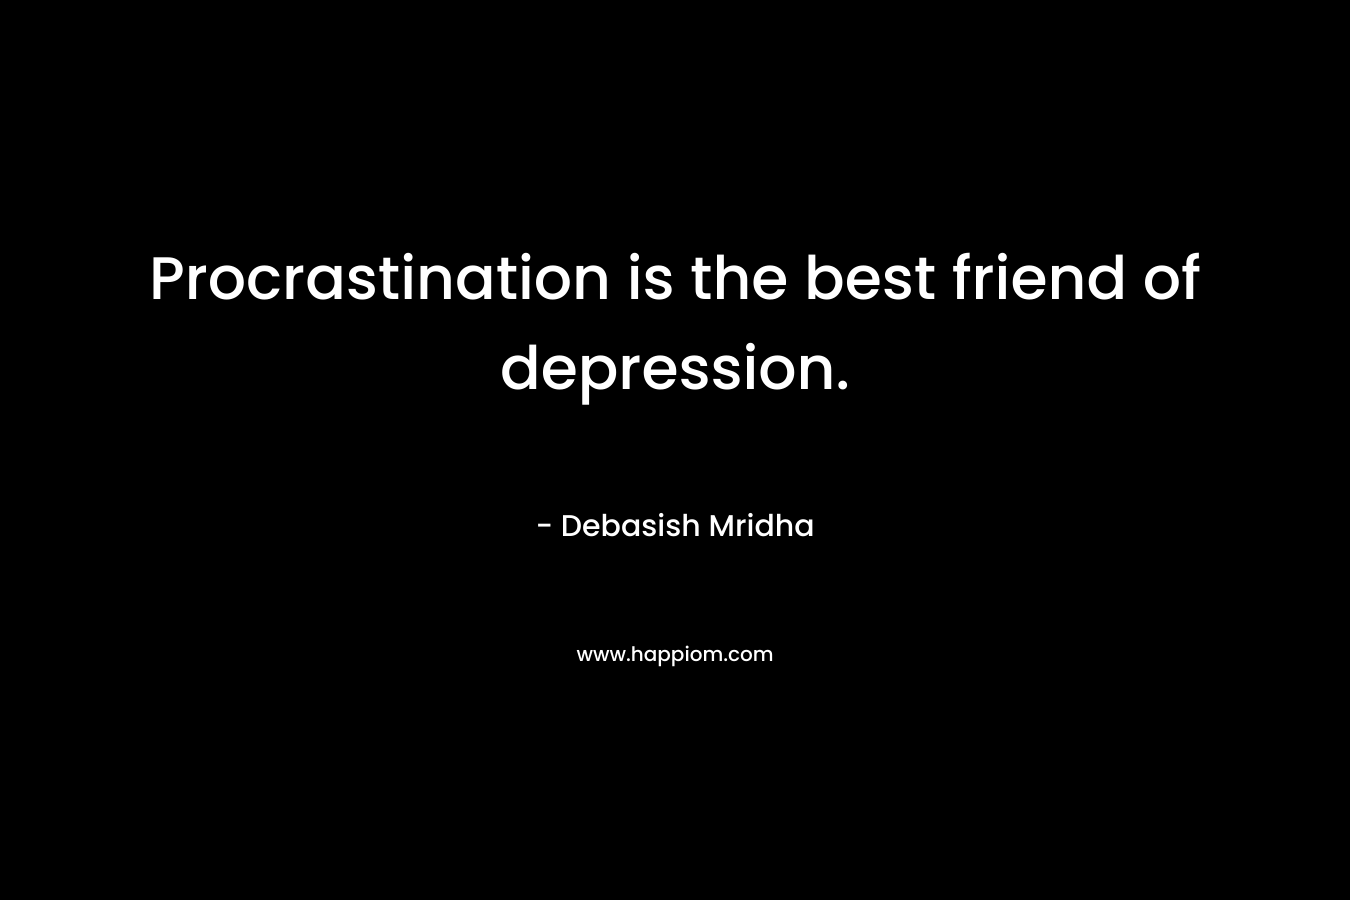 Procrastination is the best friend of depression.